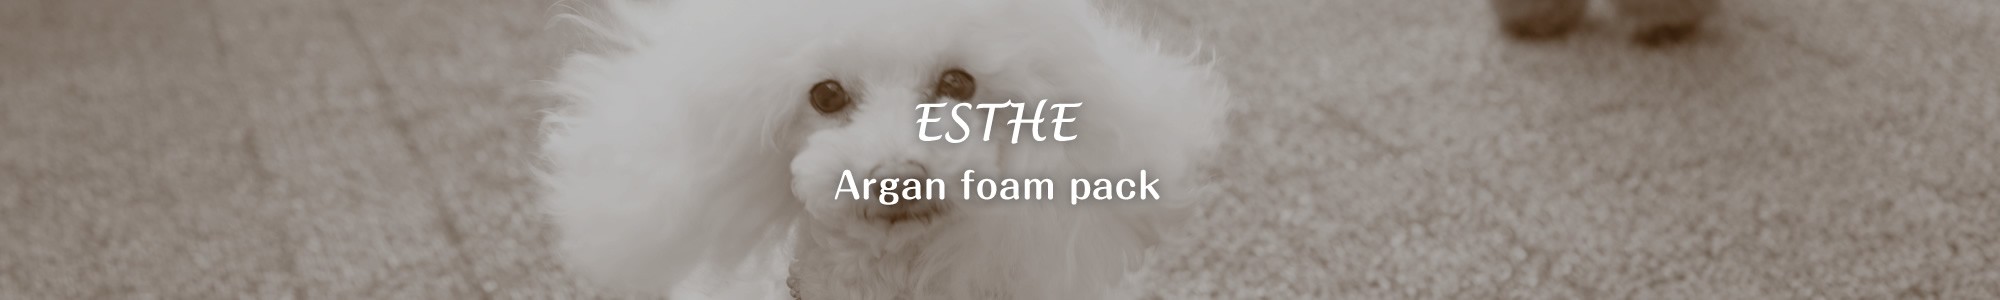 Argan foam pack